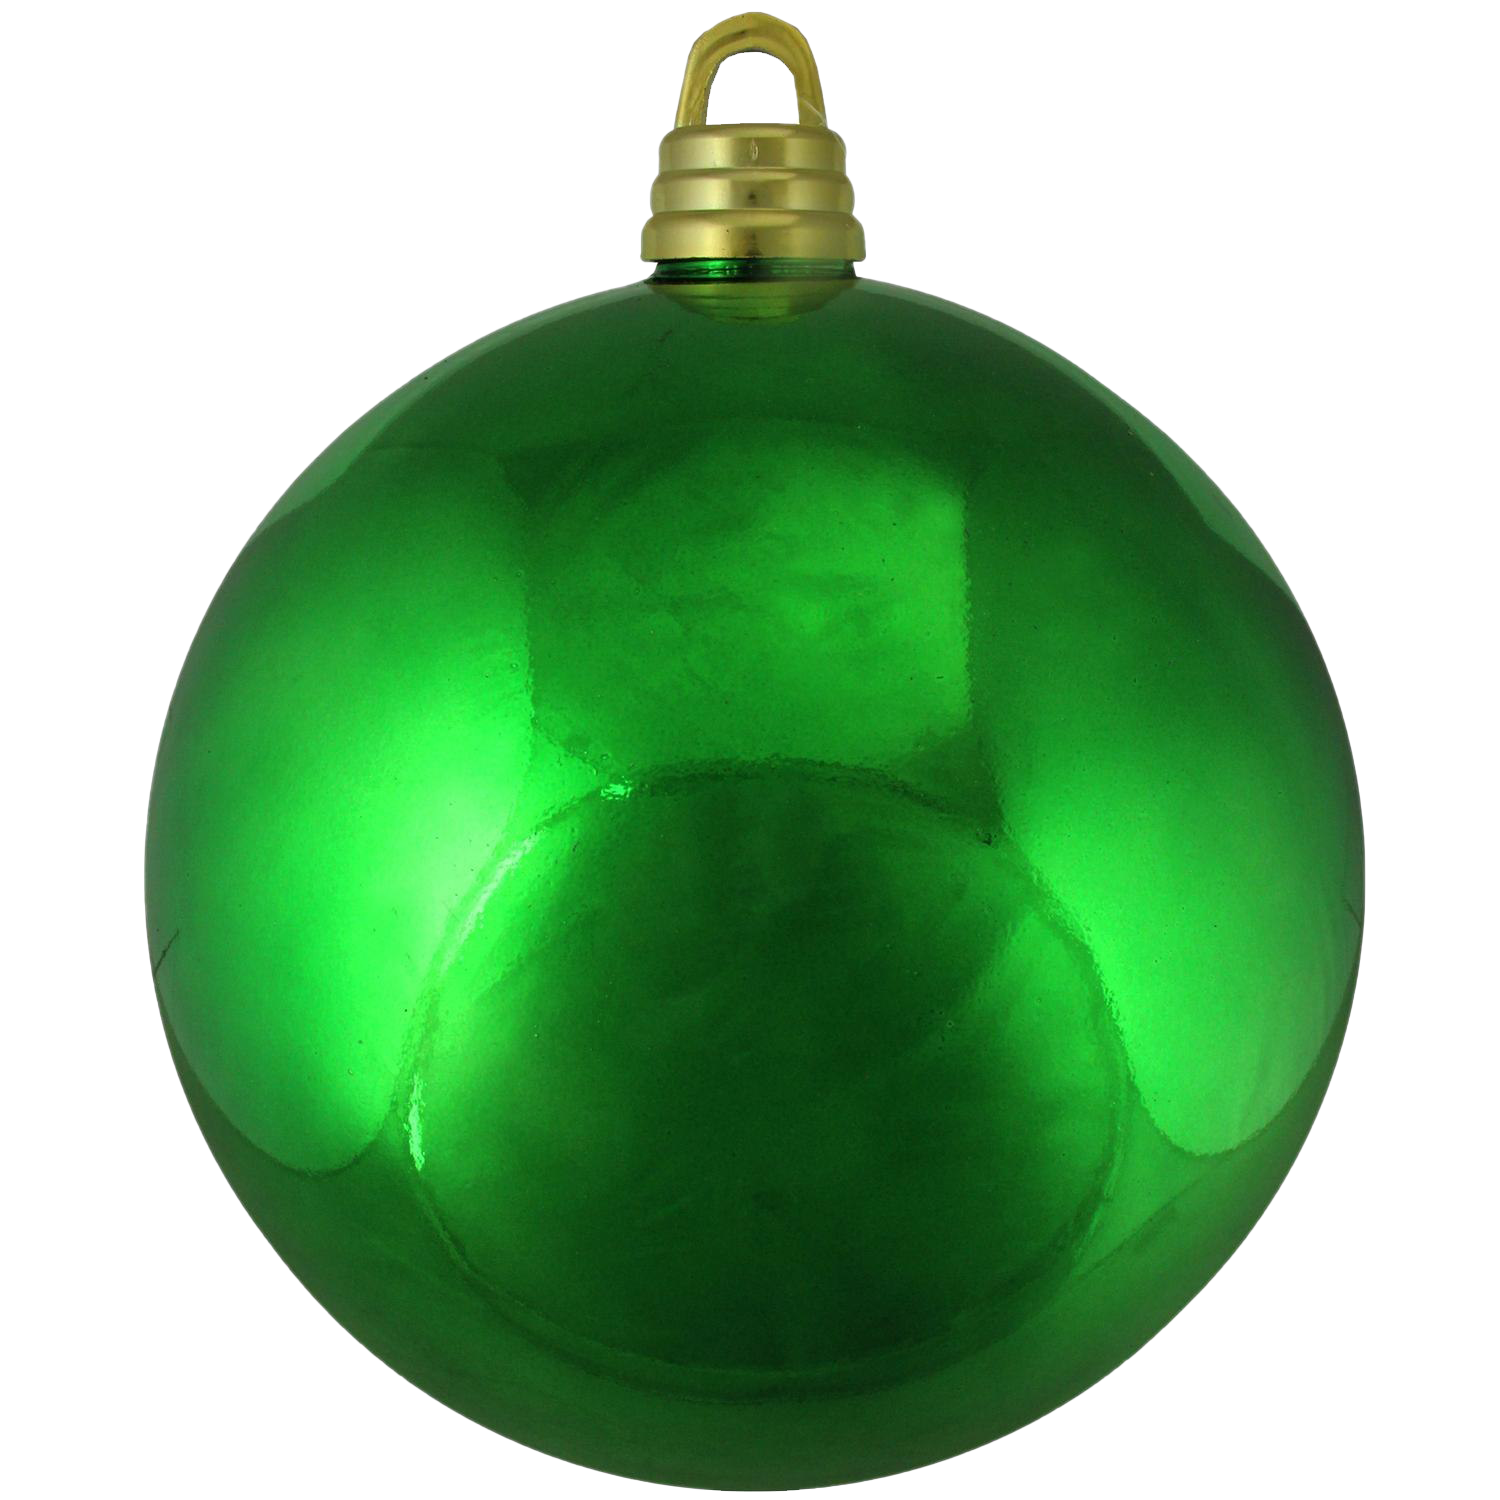 Single Green Christmas Ball PNG Clipart